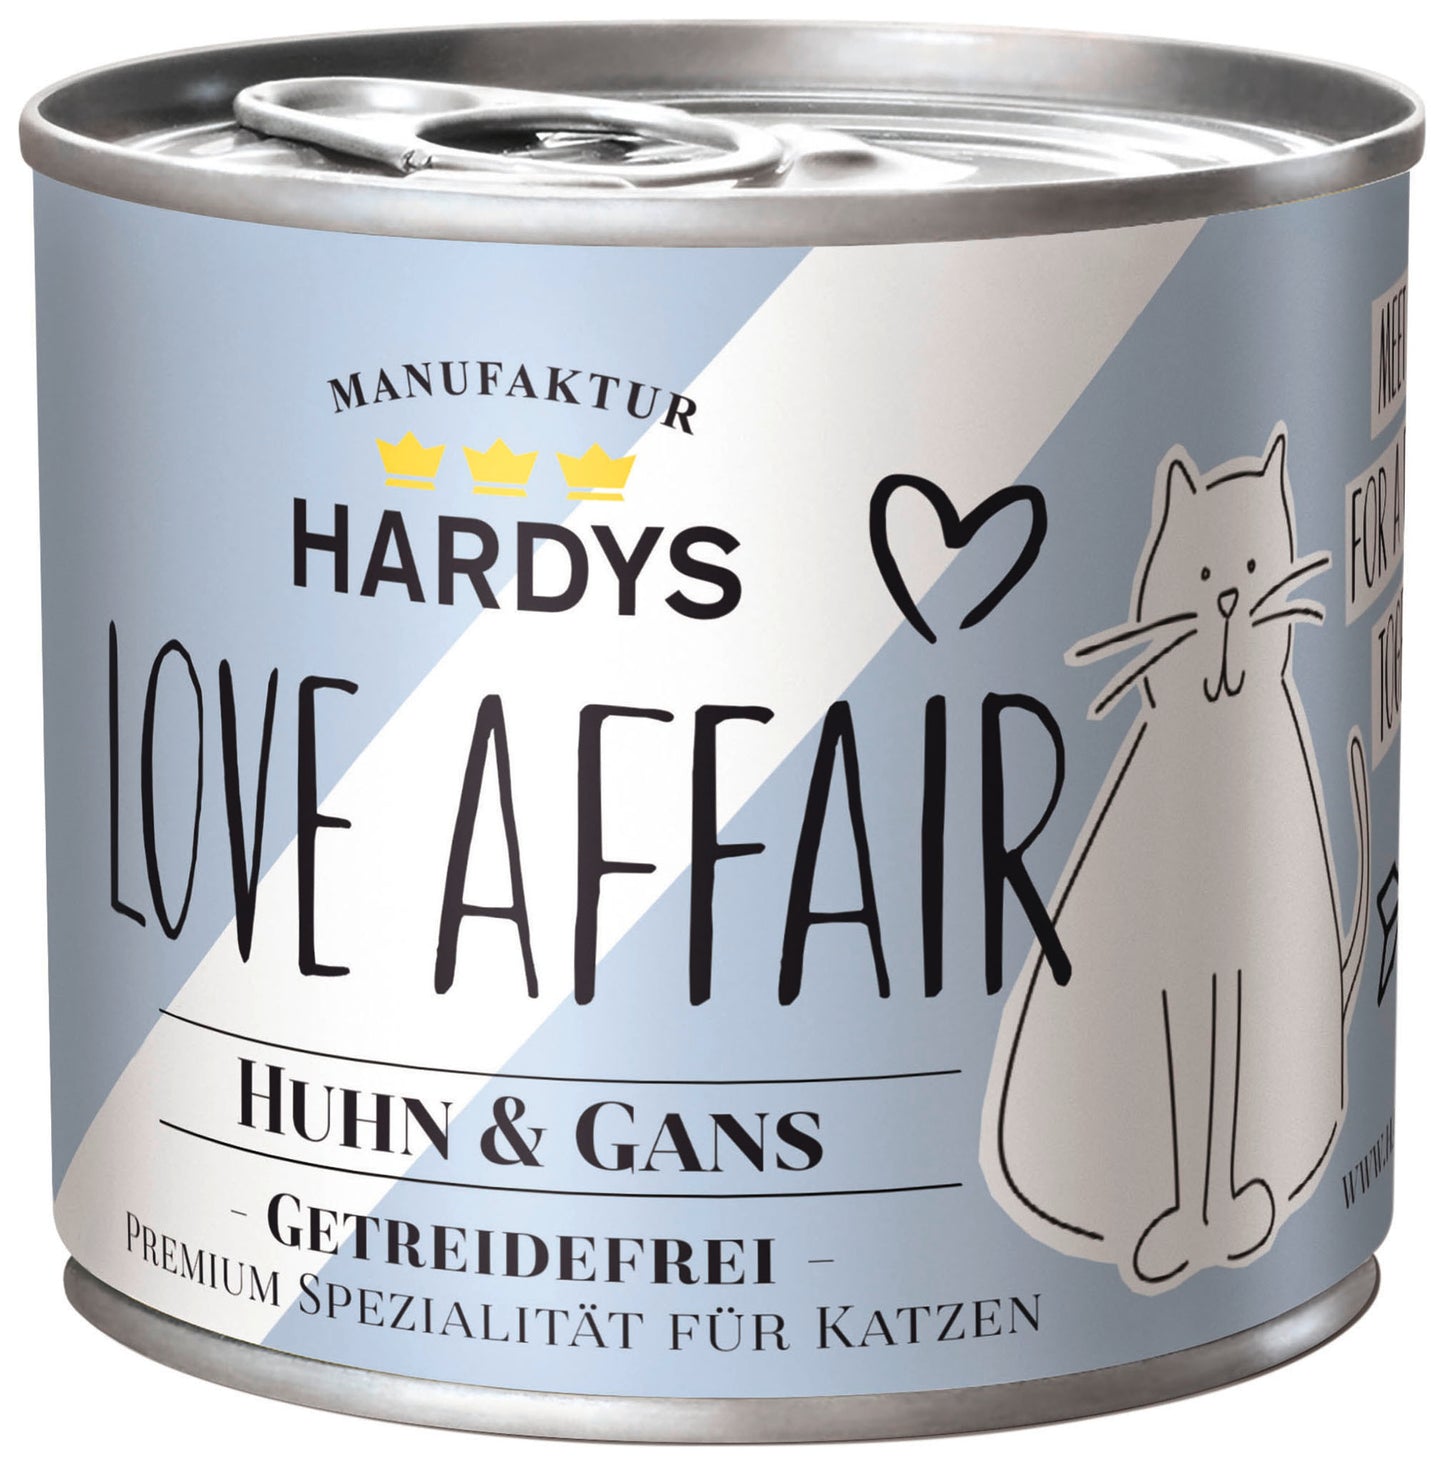 Hardys Love Affair Huhn & Gans 200g